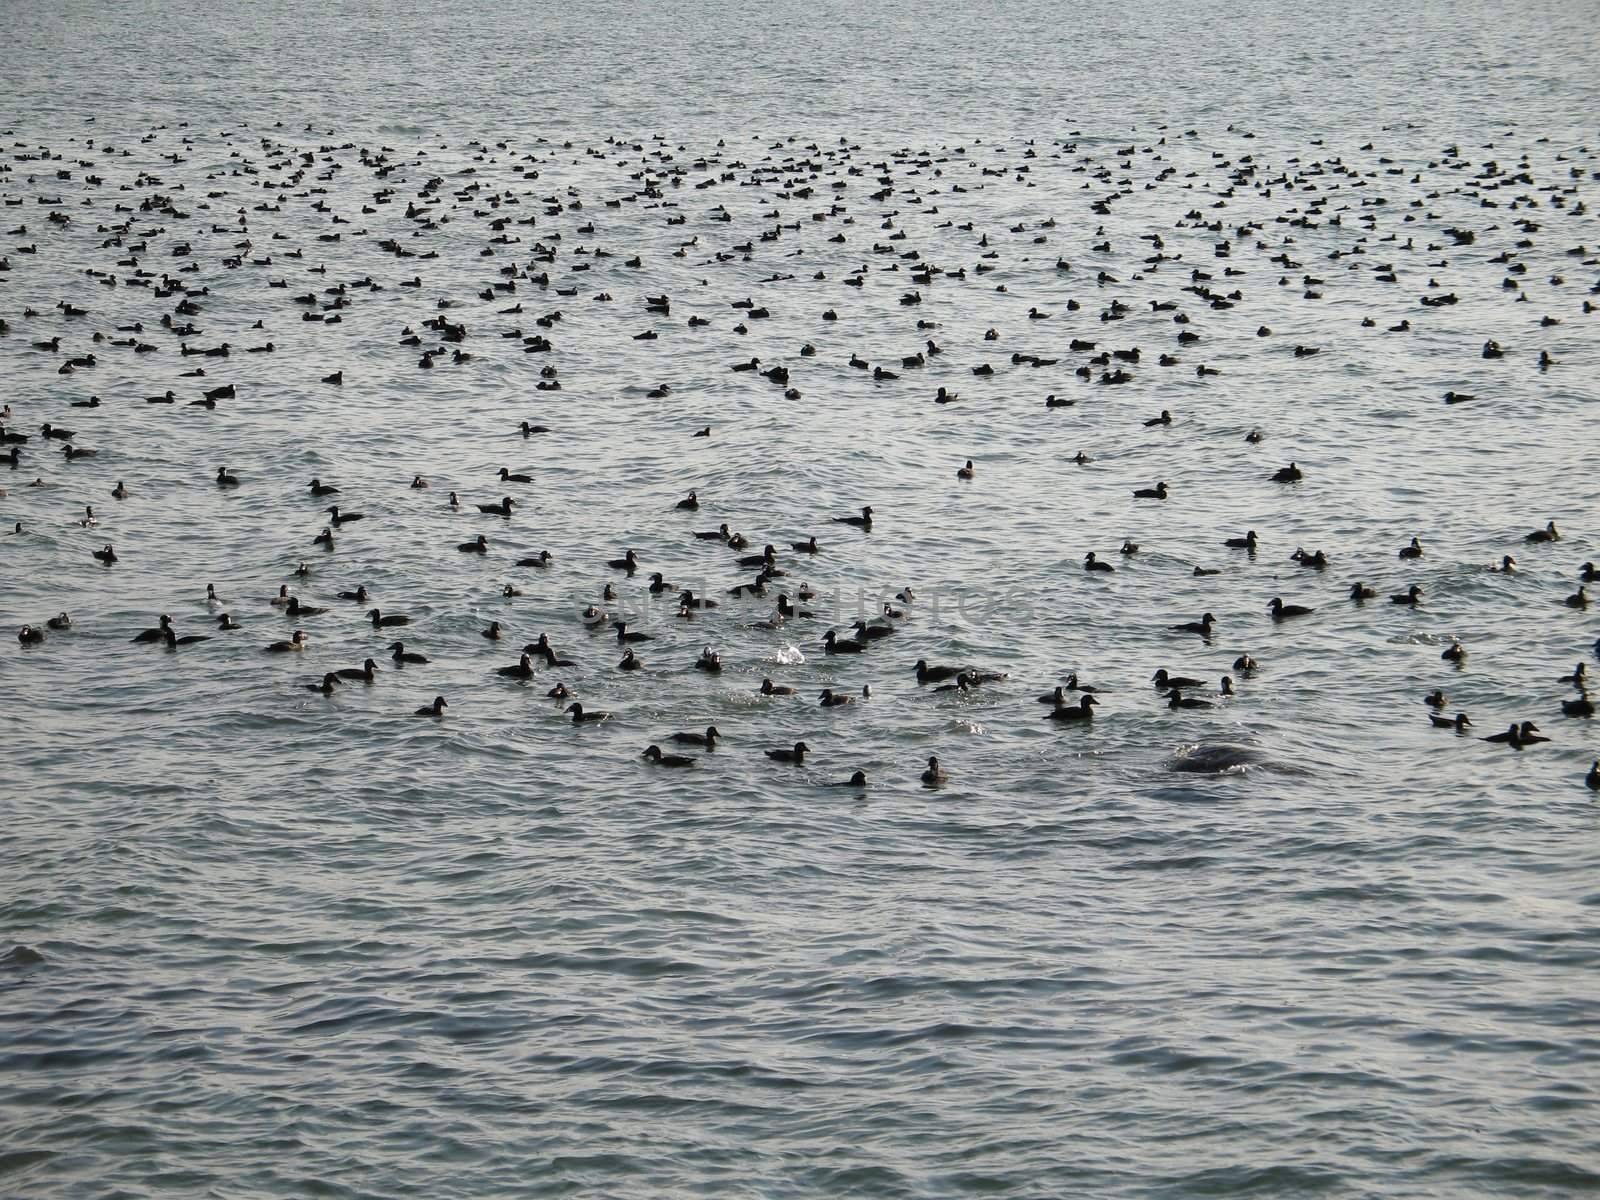 crowd of wild ducks on the ocean by mmm